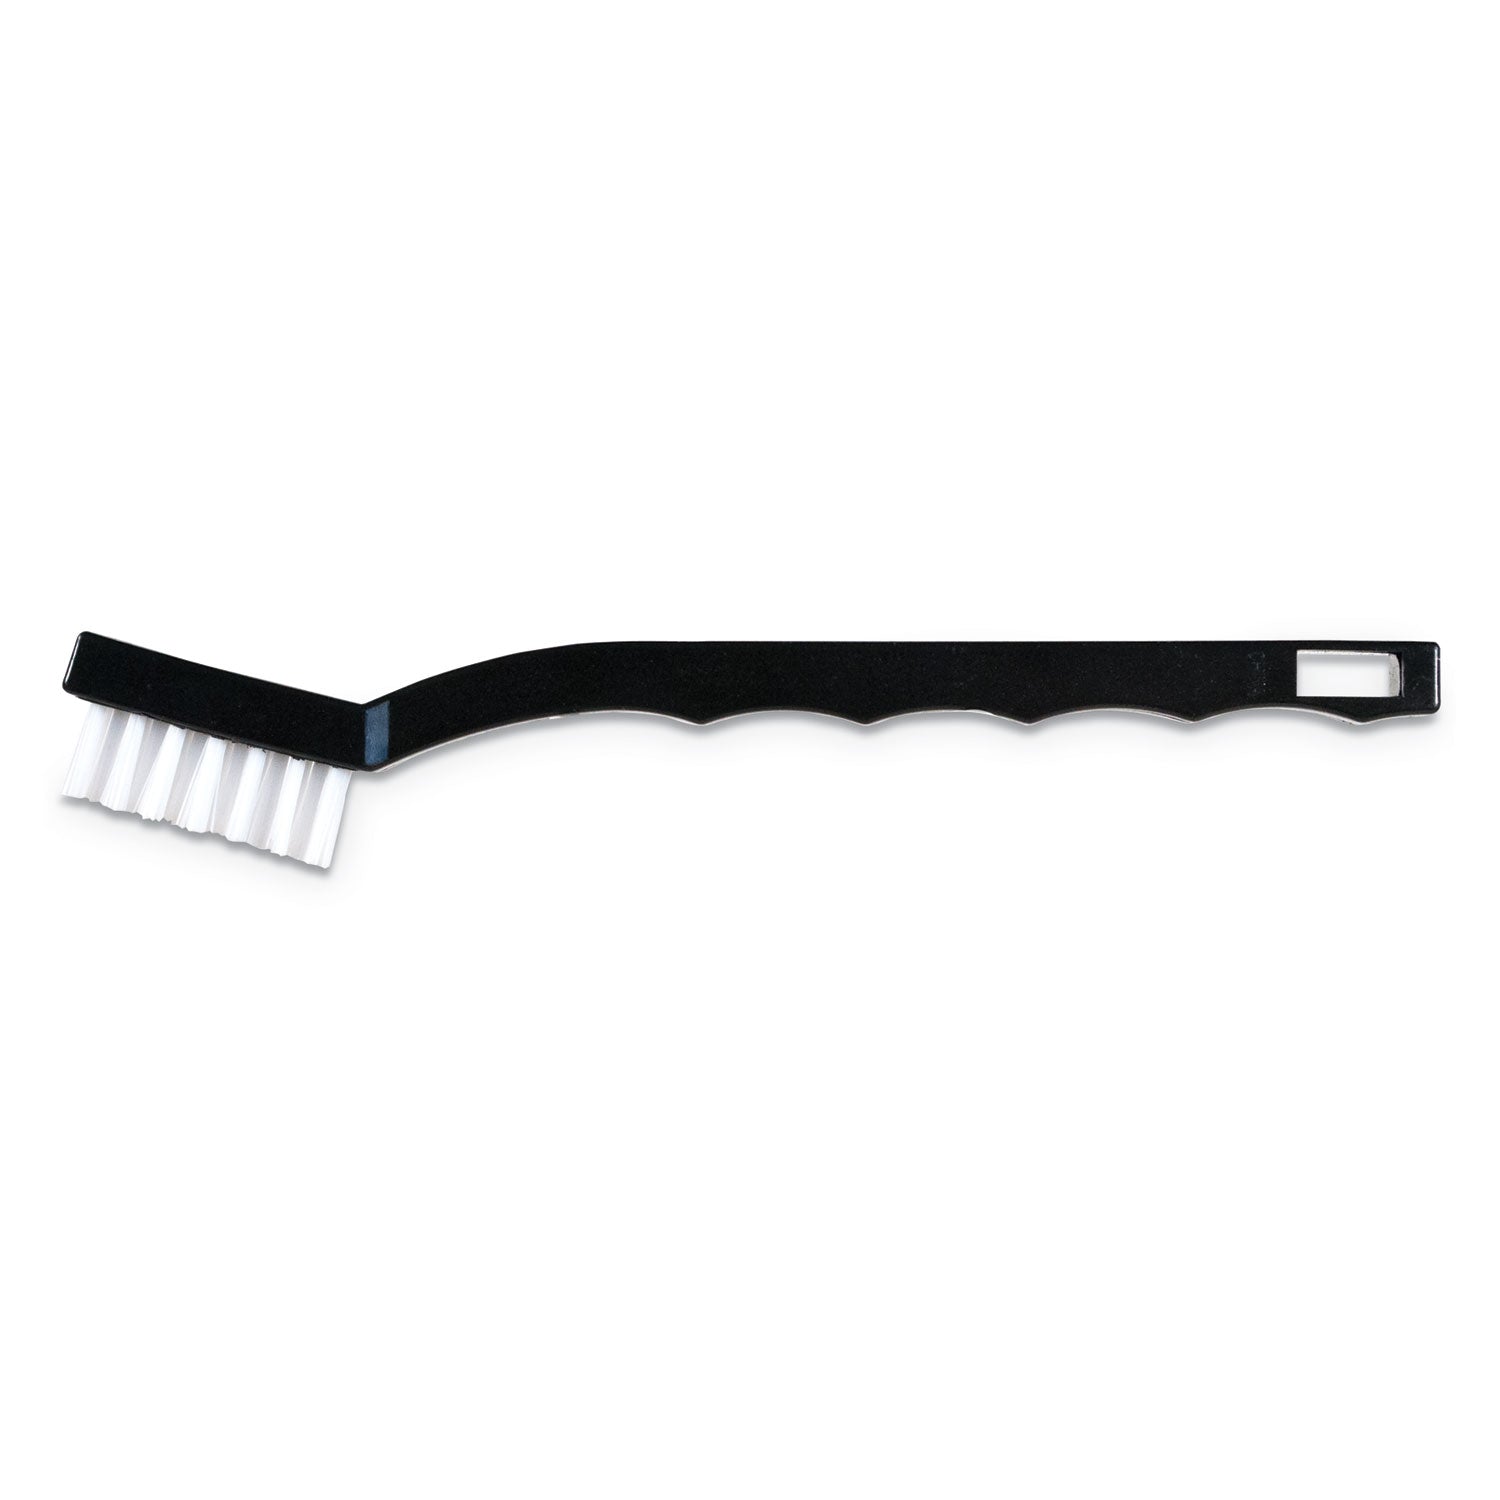 flo-pac-utility-toothbrush-style-maintenance-brush-white-nylon-bristles-725-brush-7-black-polypropylene-handle_cfs4067400dz - 1